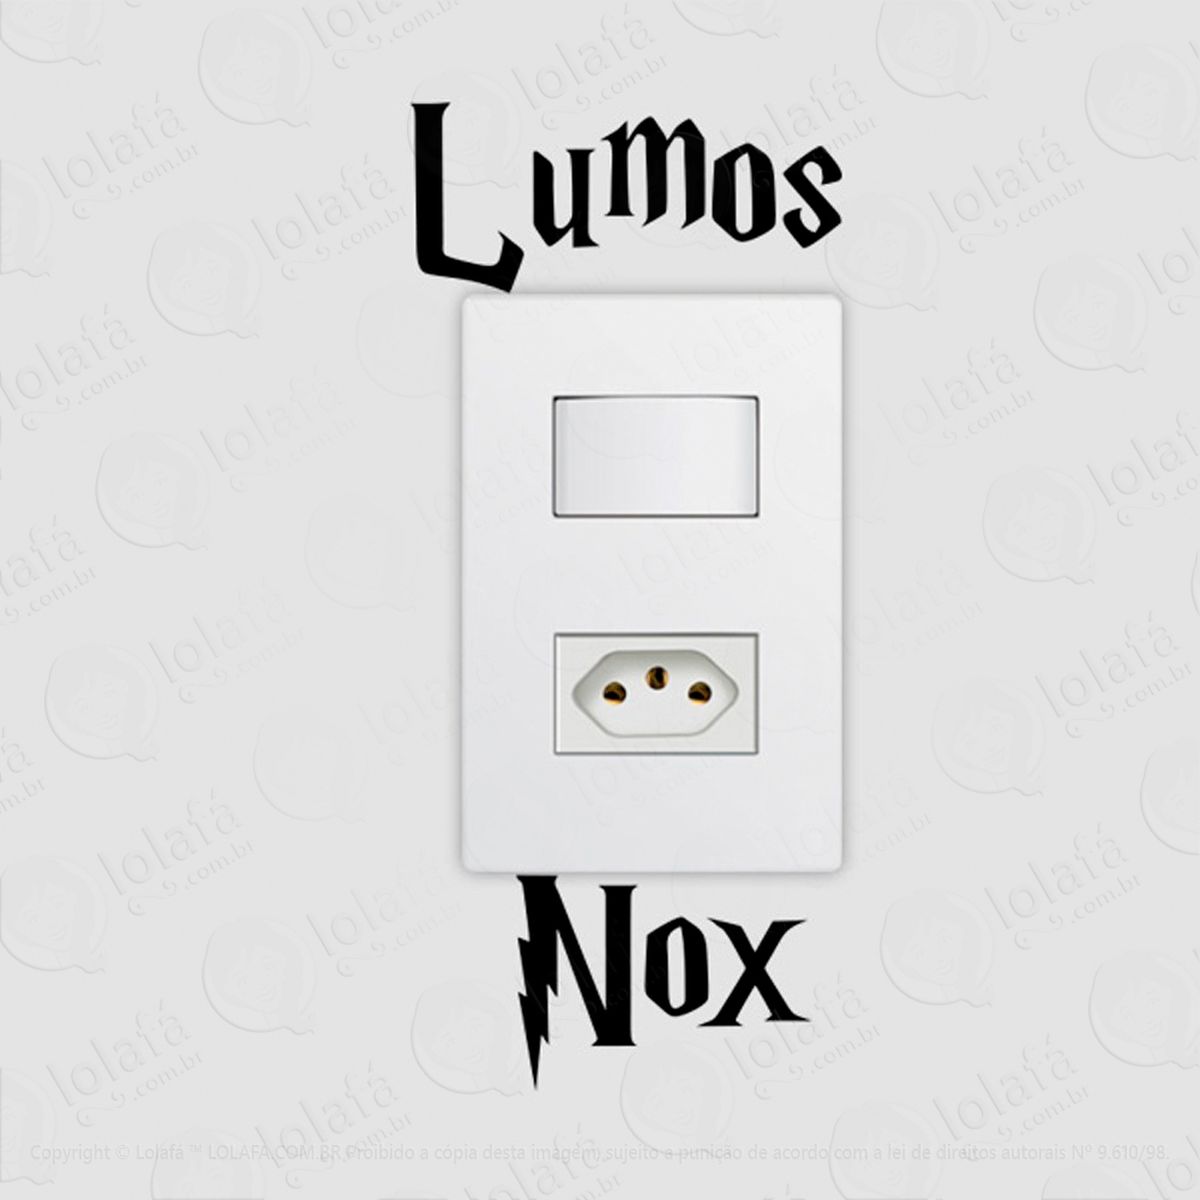 lumox nox adesivo para interruptor e tomada - mod:61